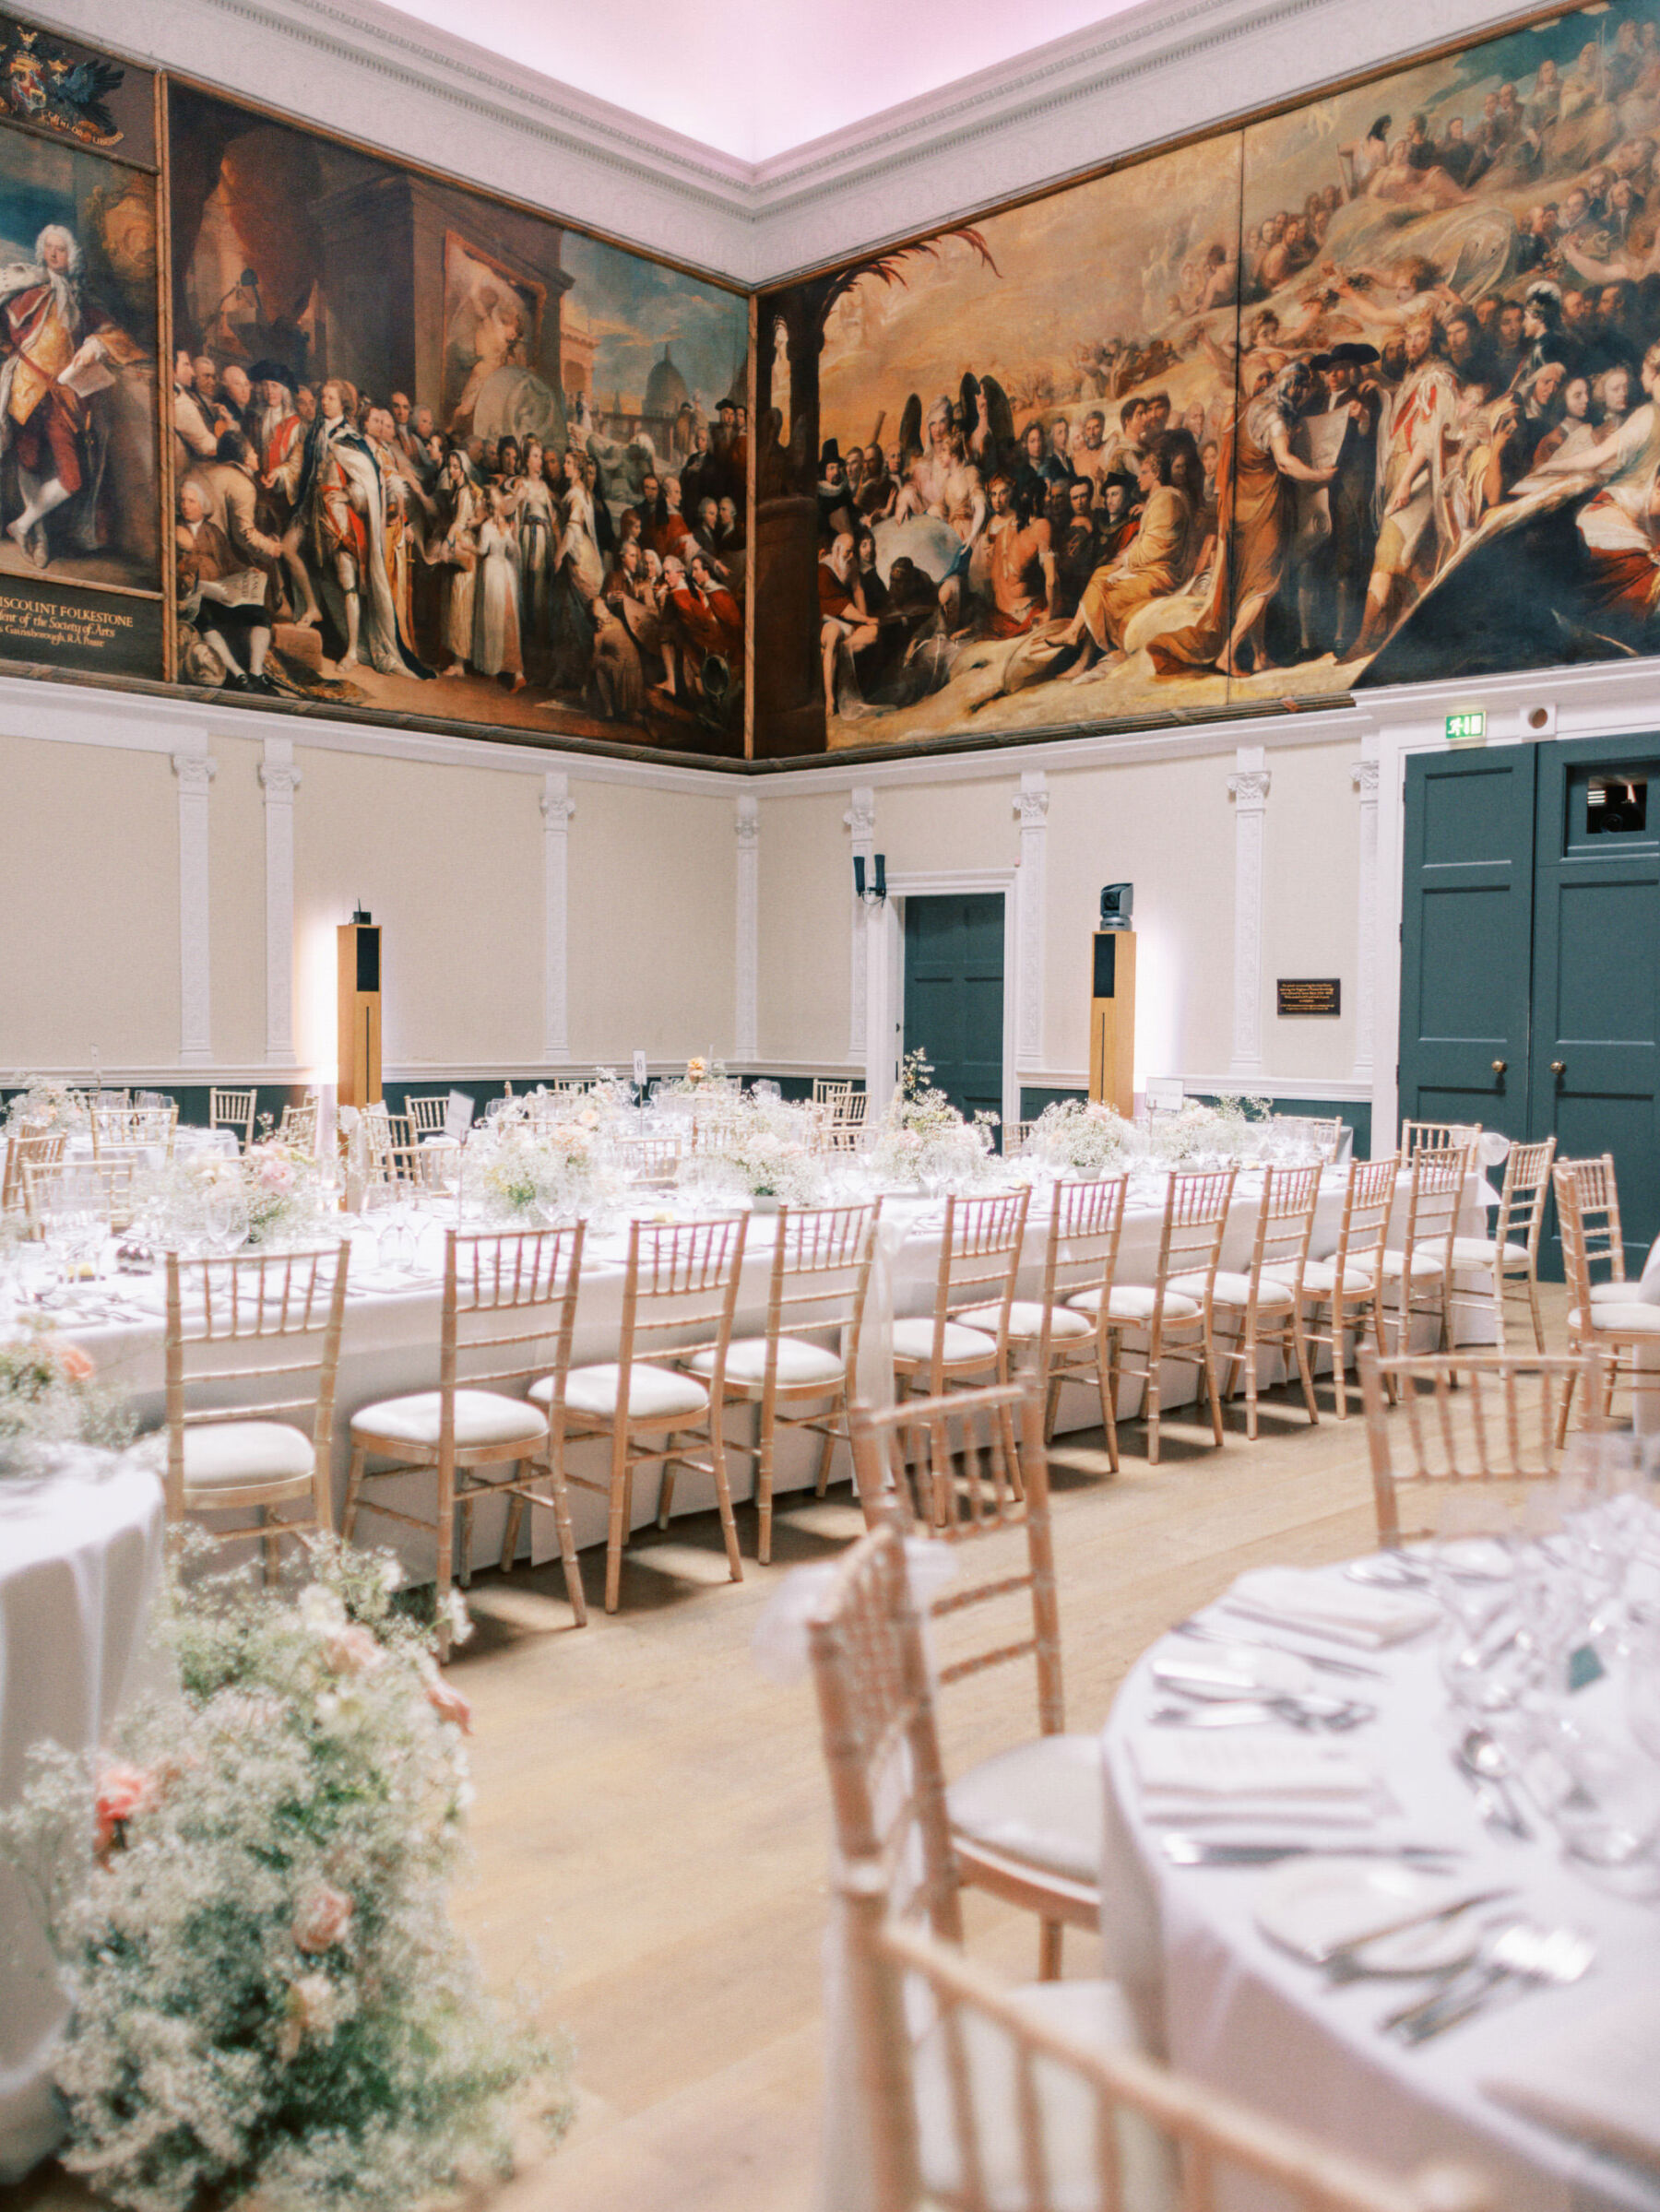 RSA House historic wedding venue London